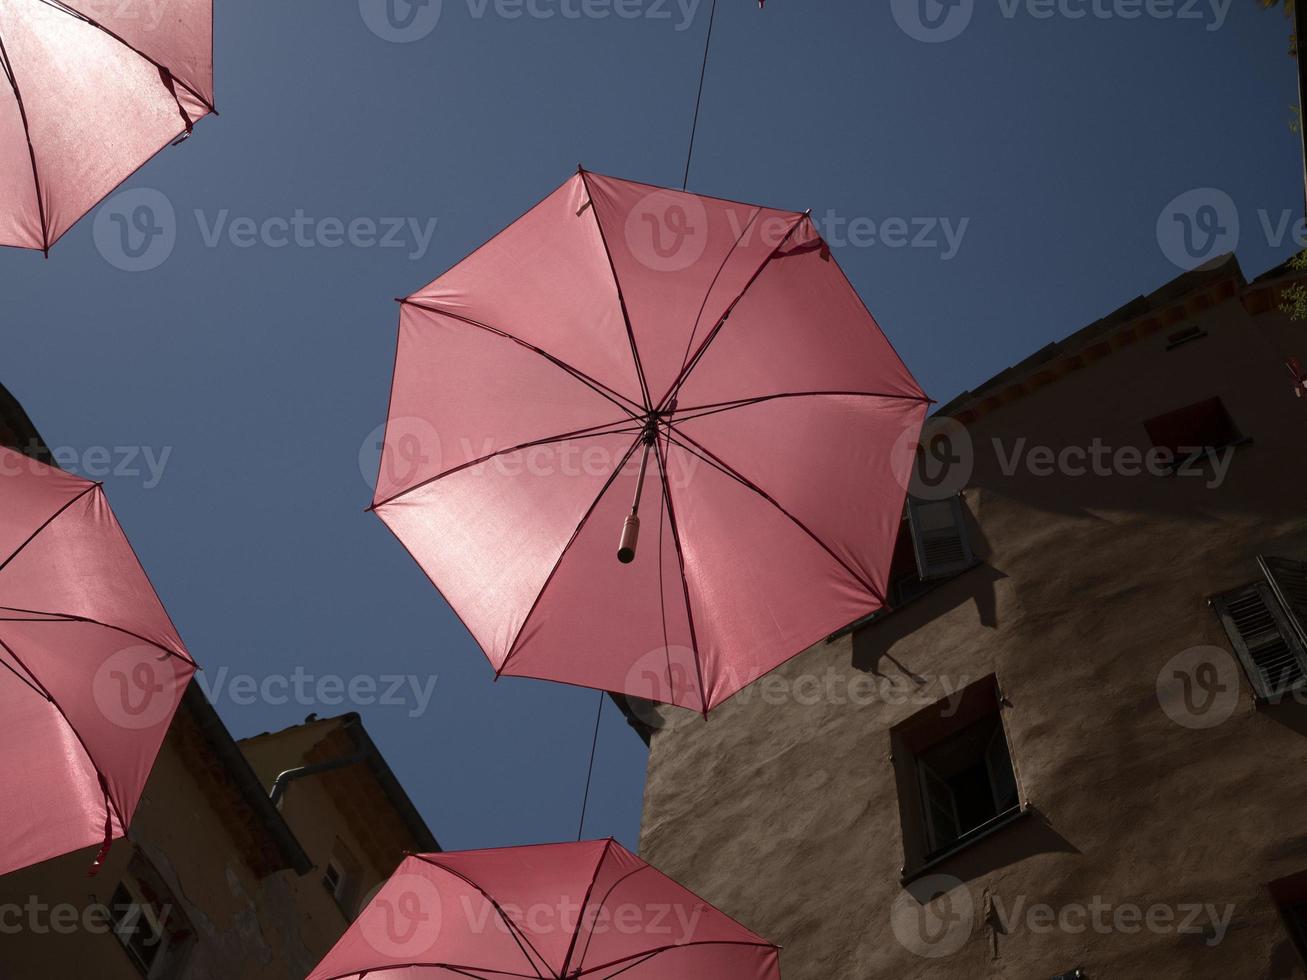 grasse frança guarda-chuvas rosa rua foto